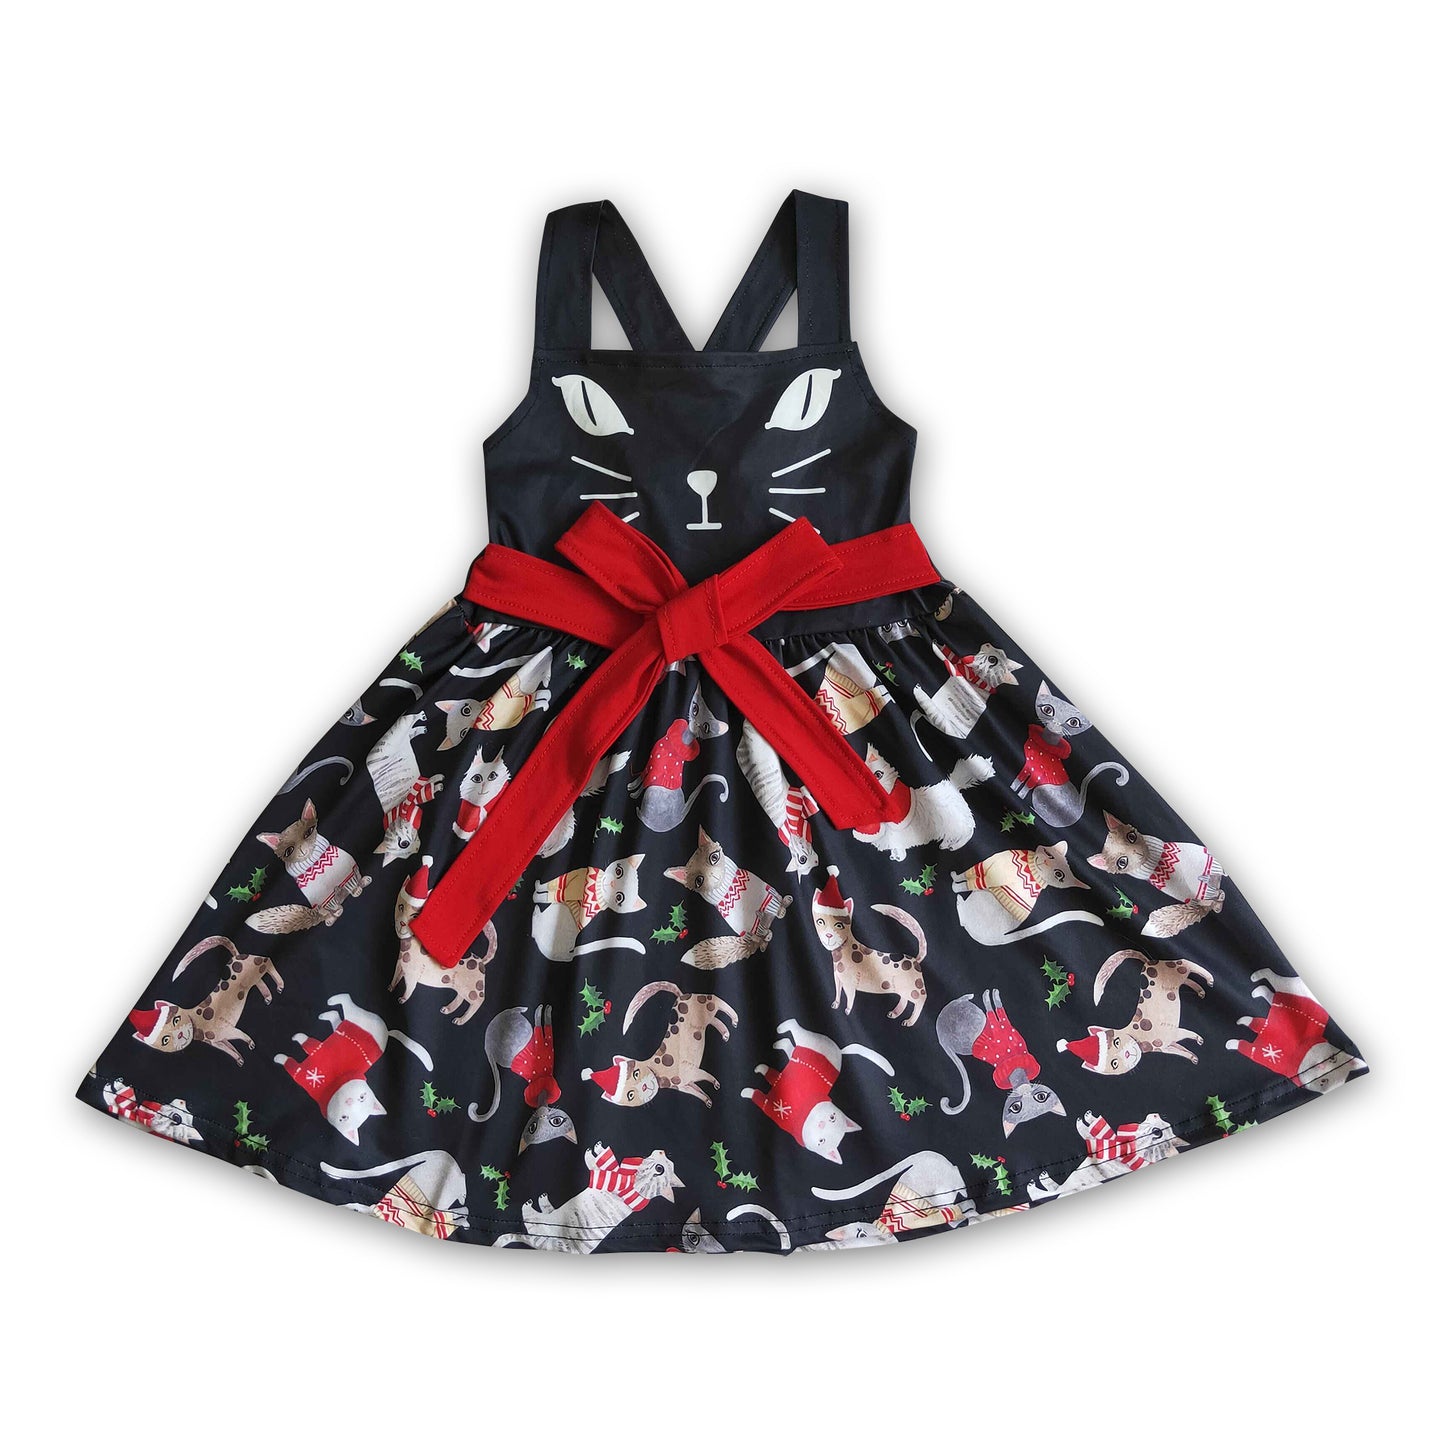 Cute cat sleeveless belt baby girls Christmas dresses